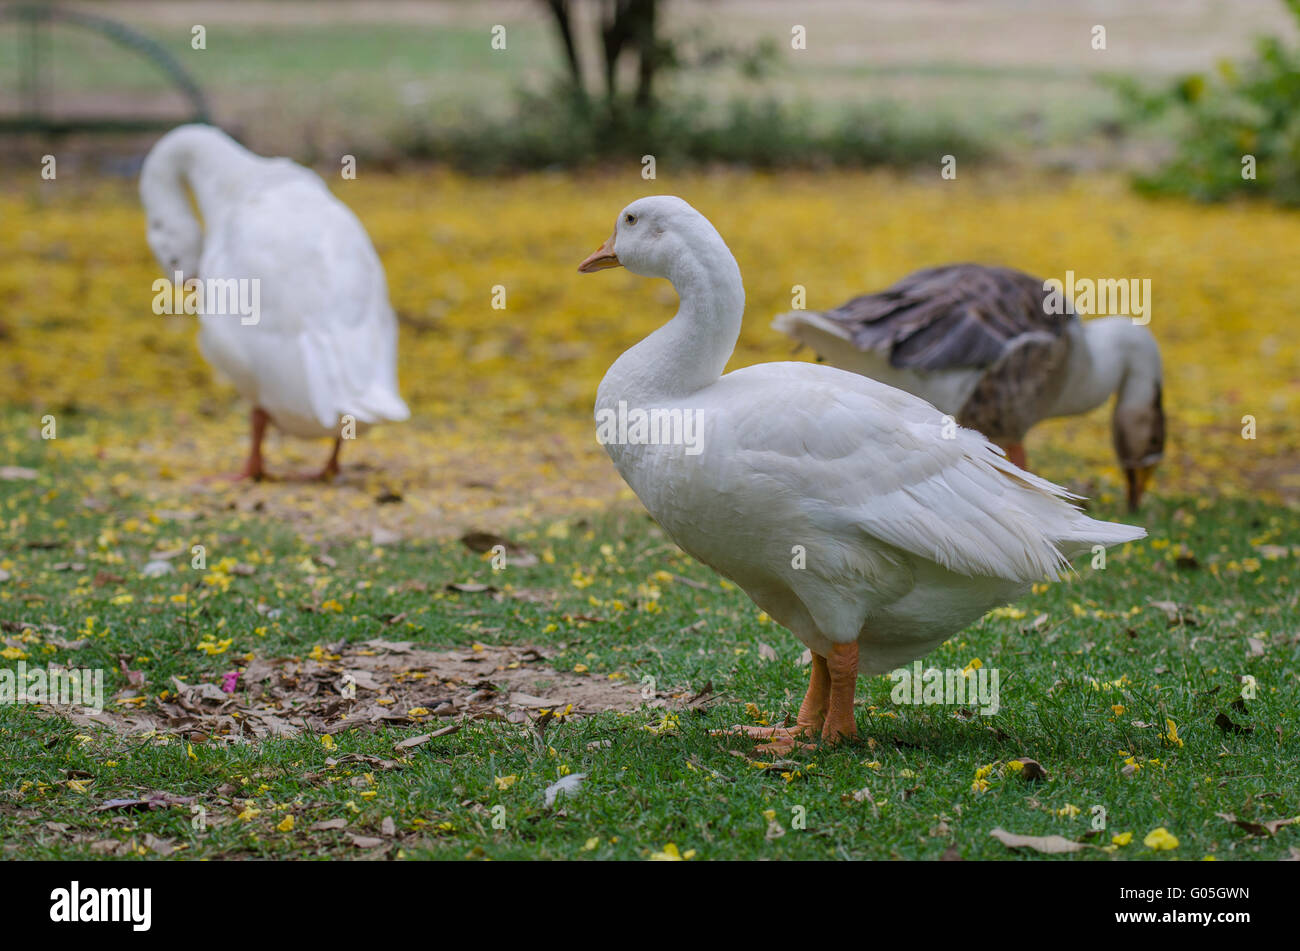 A white (emden) goose in Lodi garden, Delhi Stock Photo